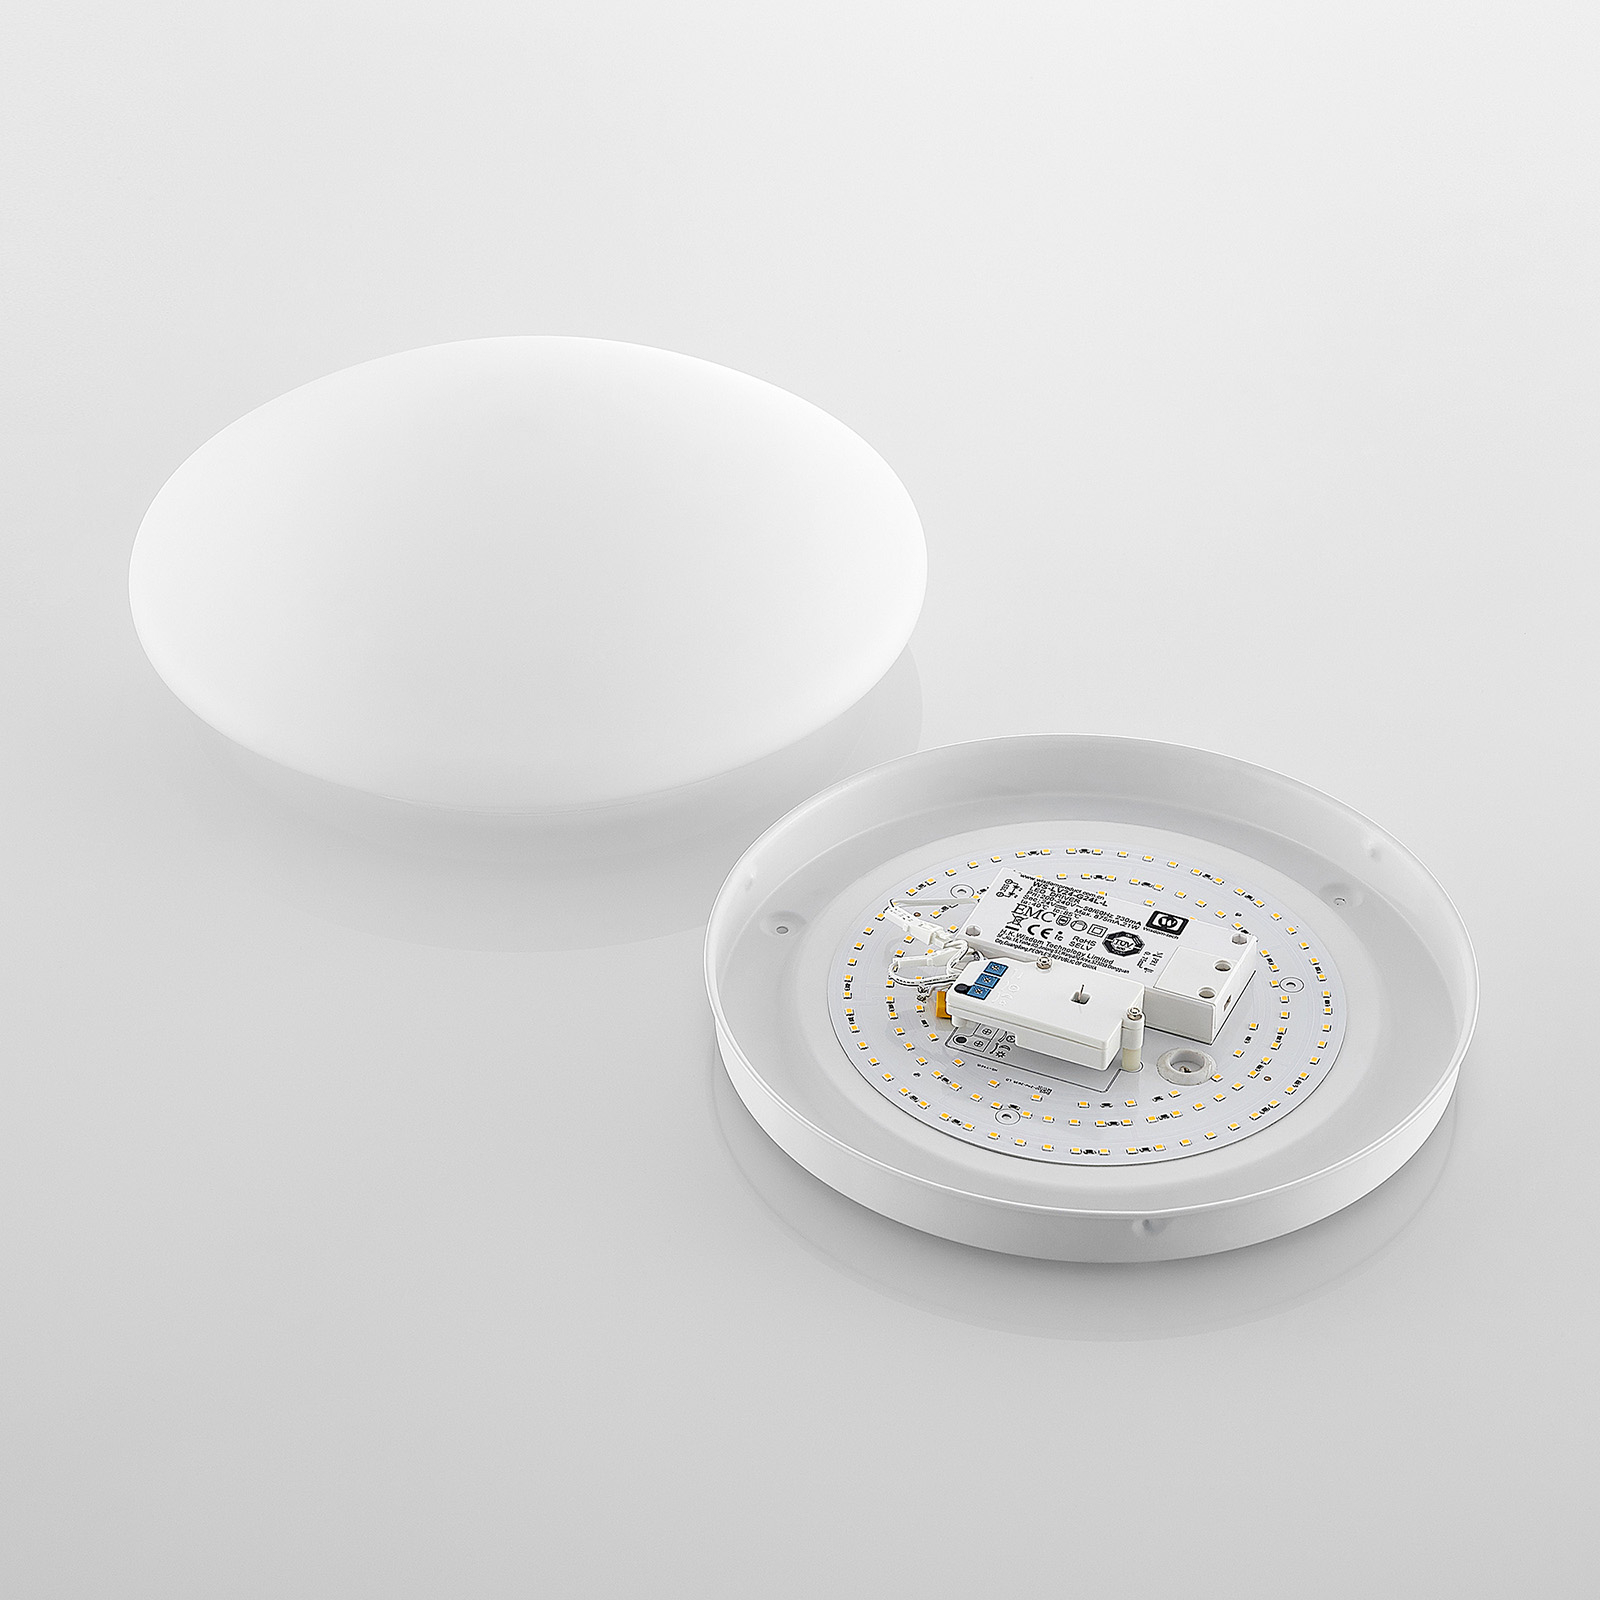 Arcchio Marlie LED ceiling lamp, sensor, 3,000 K